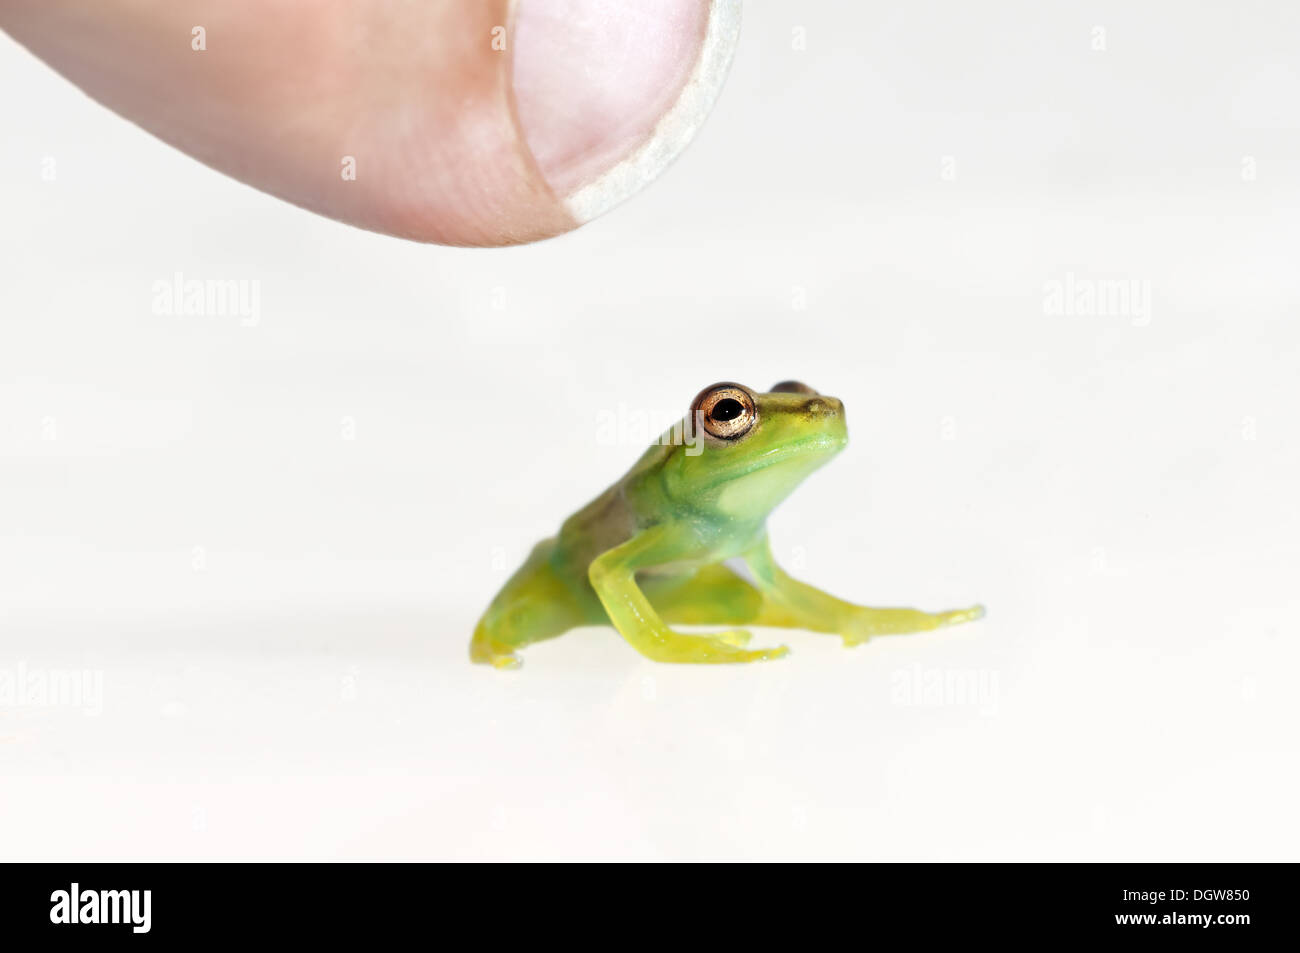 Juvenile of Orinoco lime tree frog Stock Photo